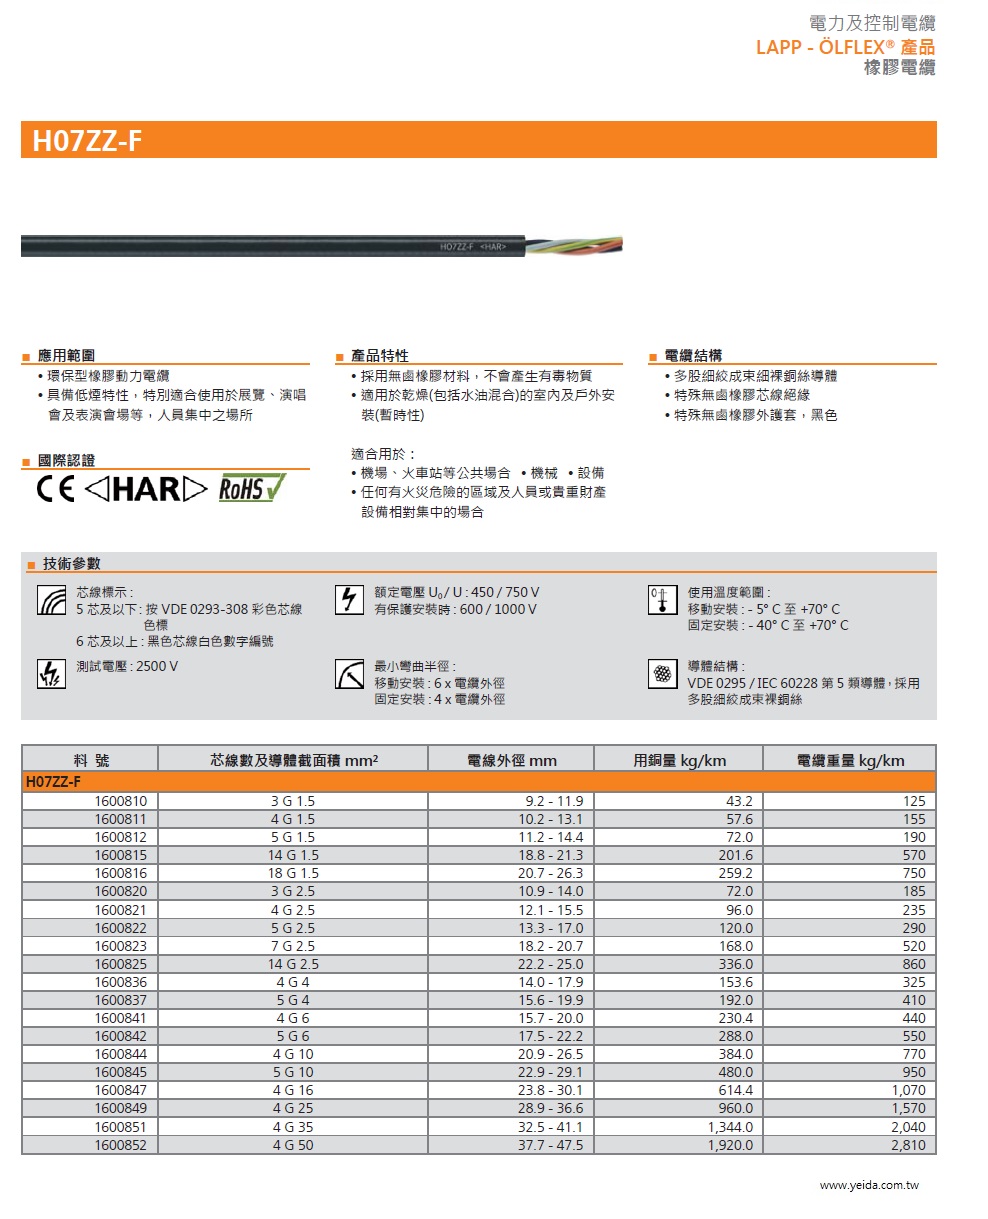 H07ZZ-F 450 / 750 V , - 40° C 至 +70° C 電力及控制環保型橡膠電纜